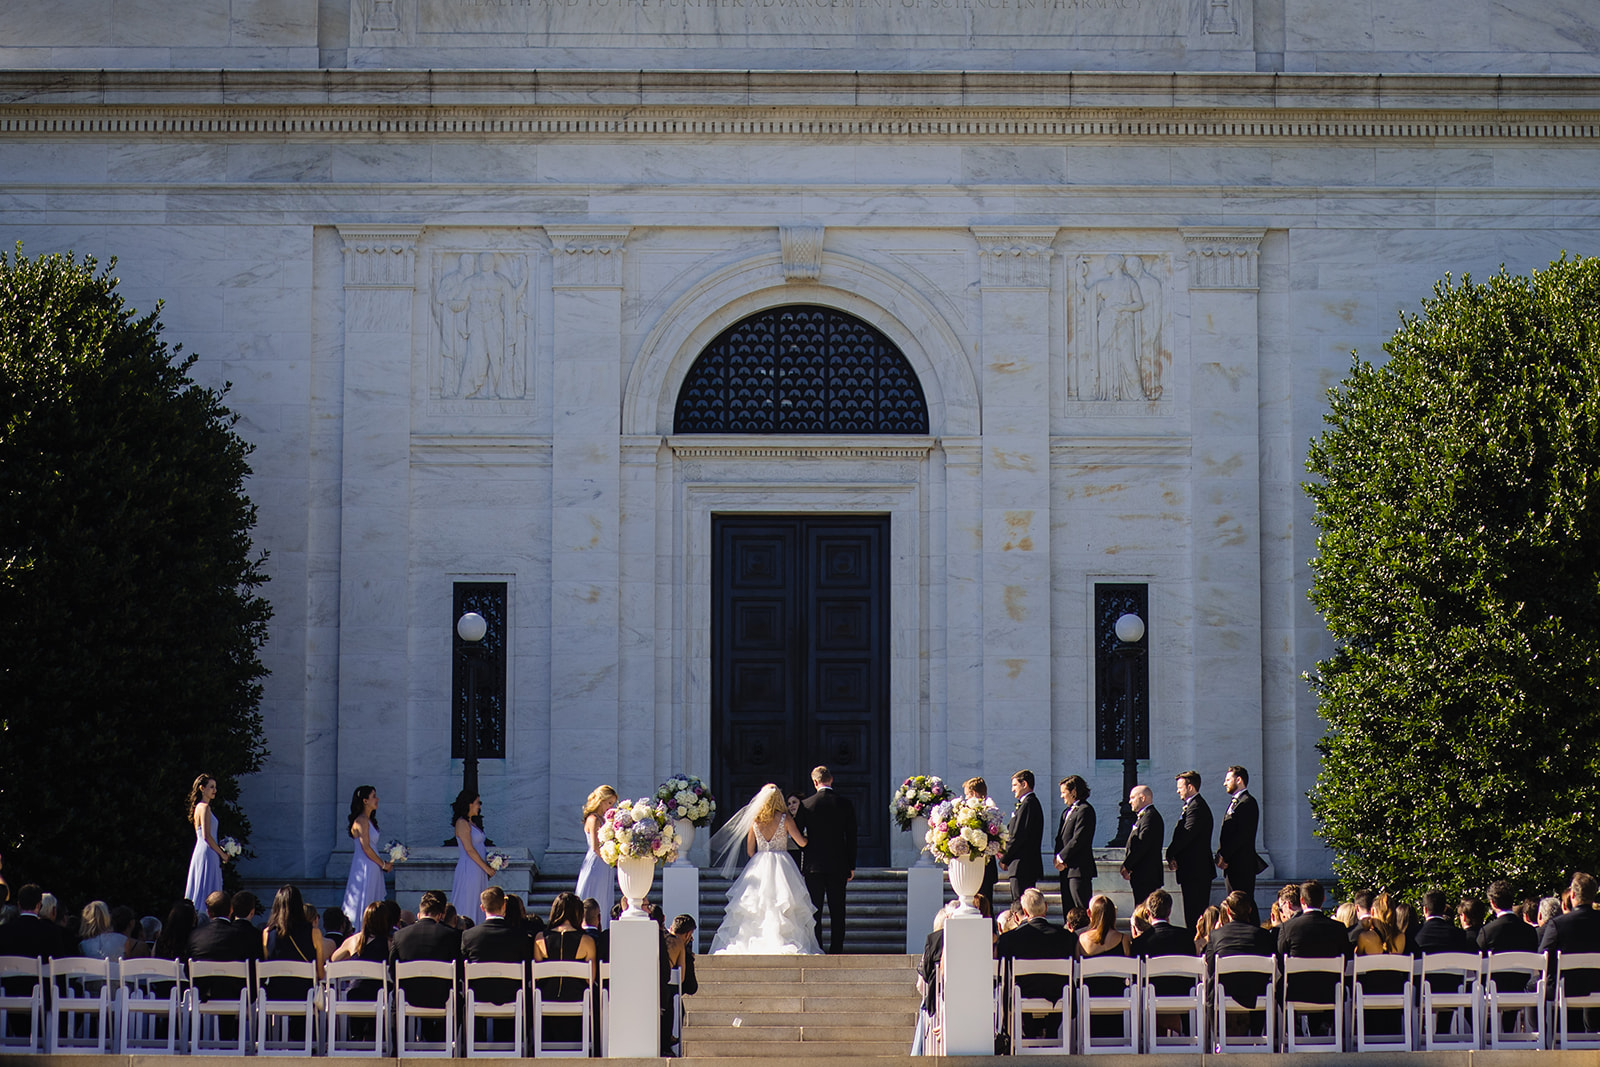 Potomac View Terrace Wedding ceremony